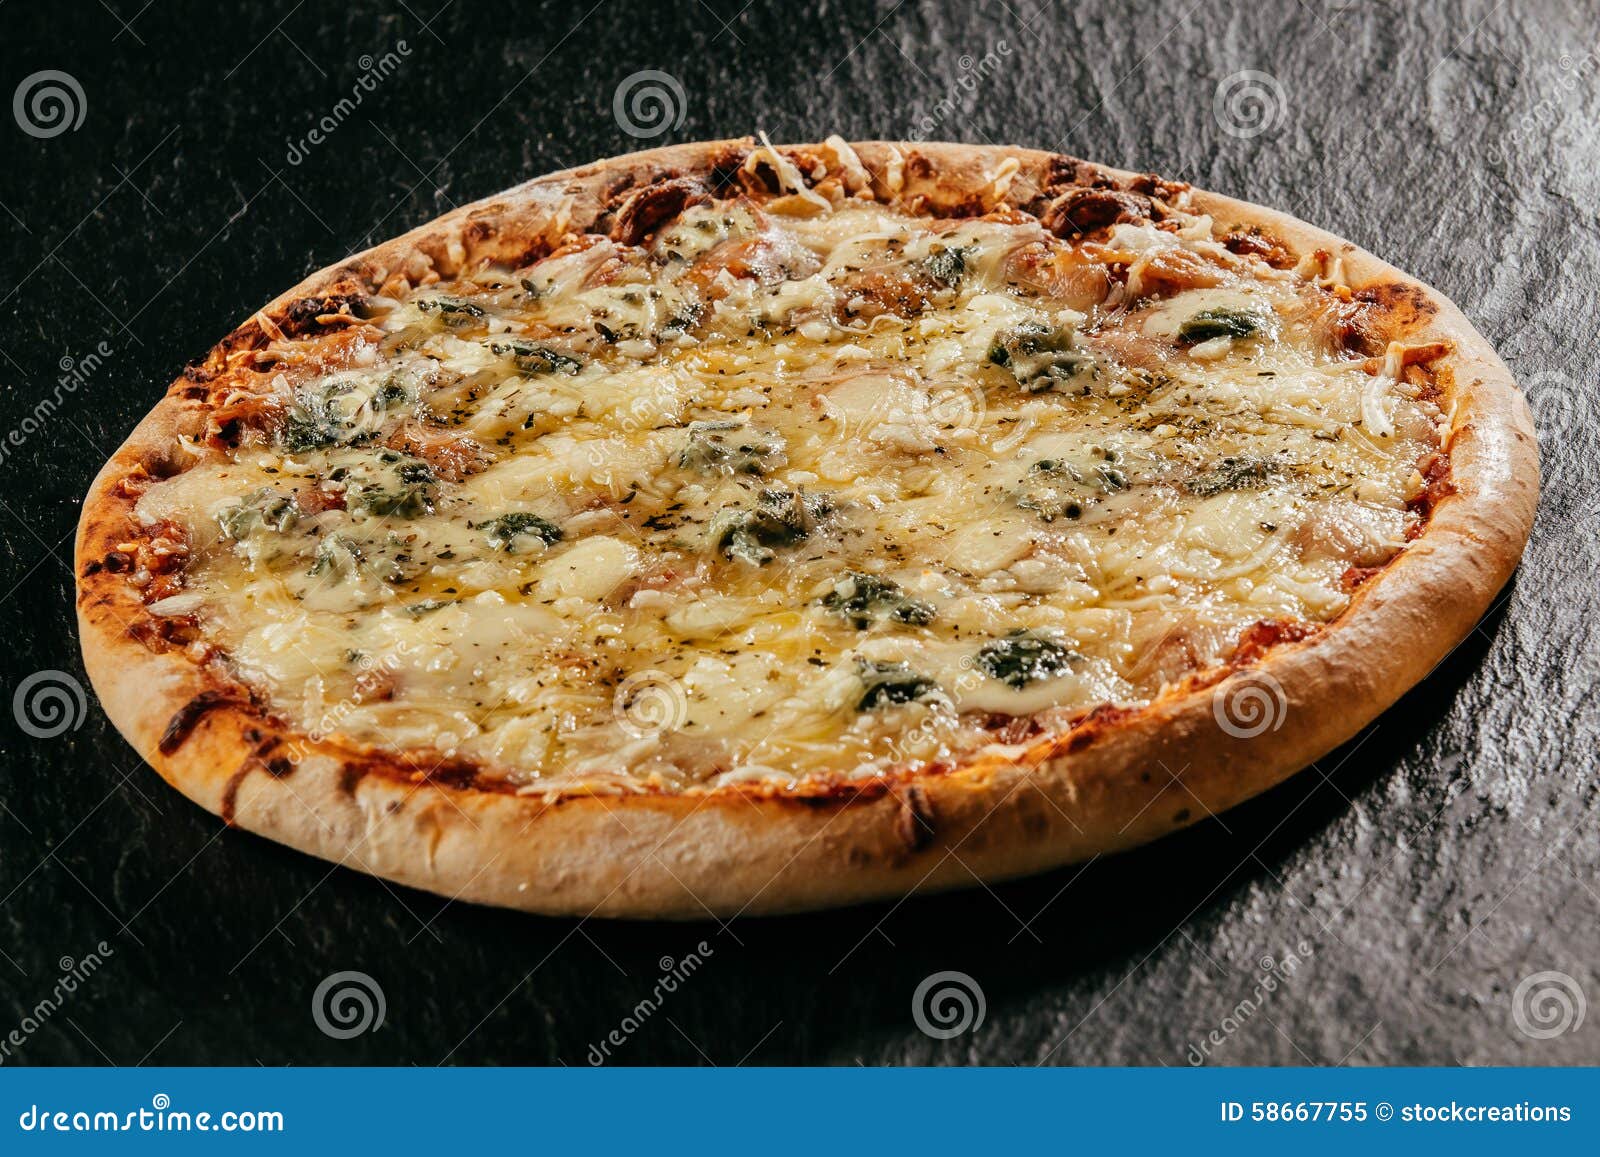 пицца la trattoria четыре сыра замороженная фото 77